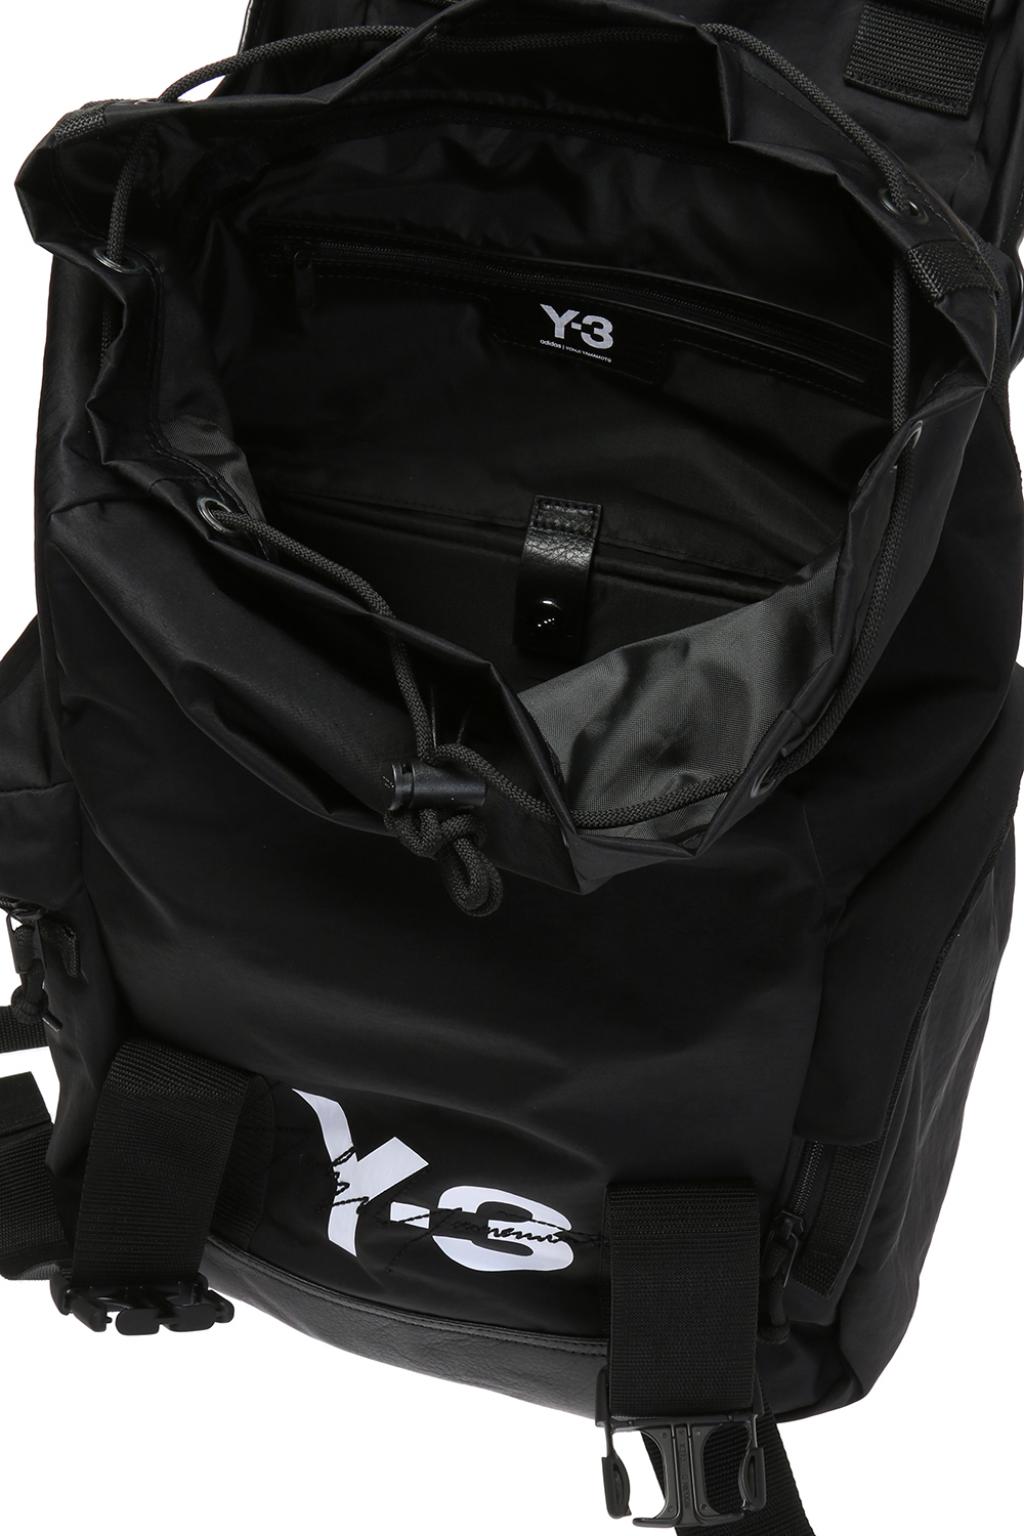 Black MOBILITY' backpack Y-3 Yohji Yamamoto - Vitkac GB